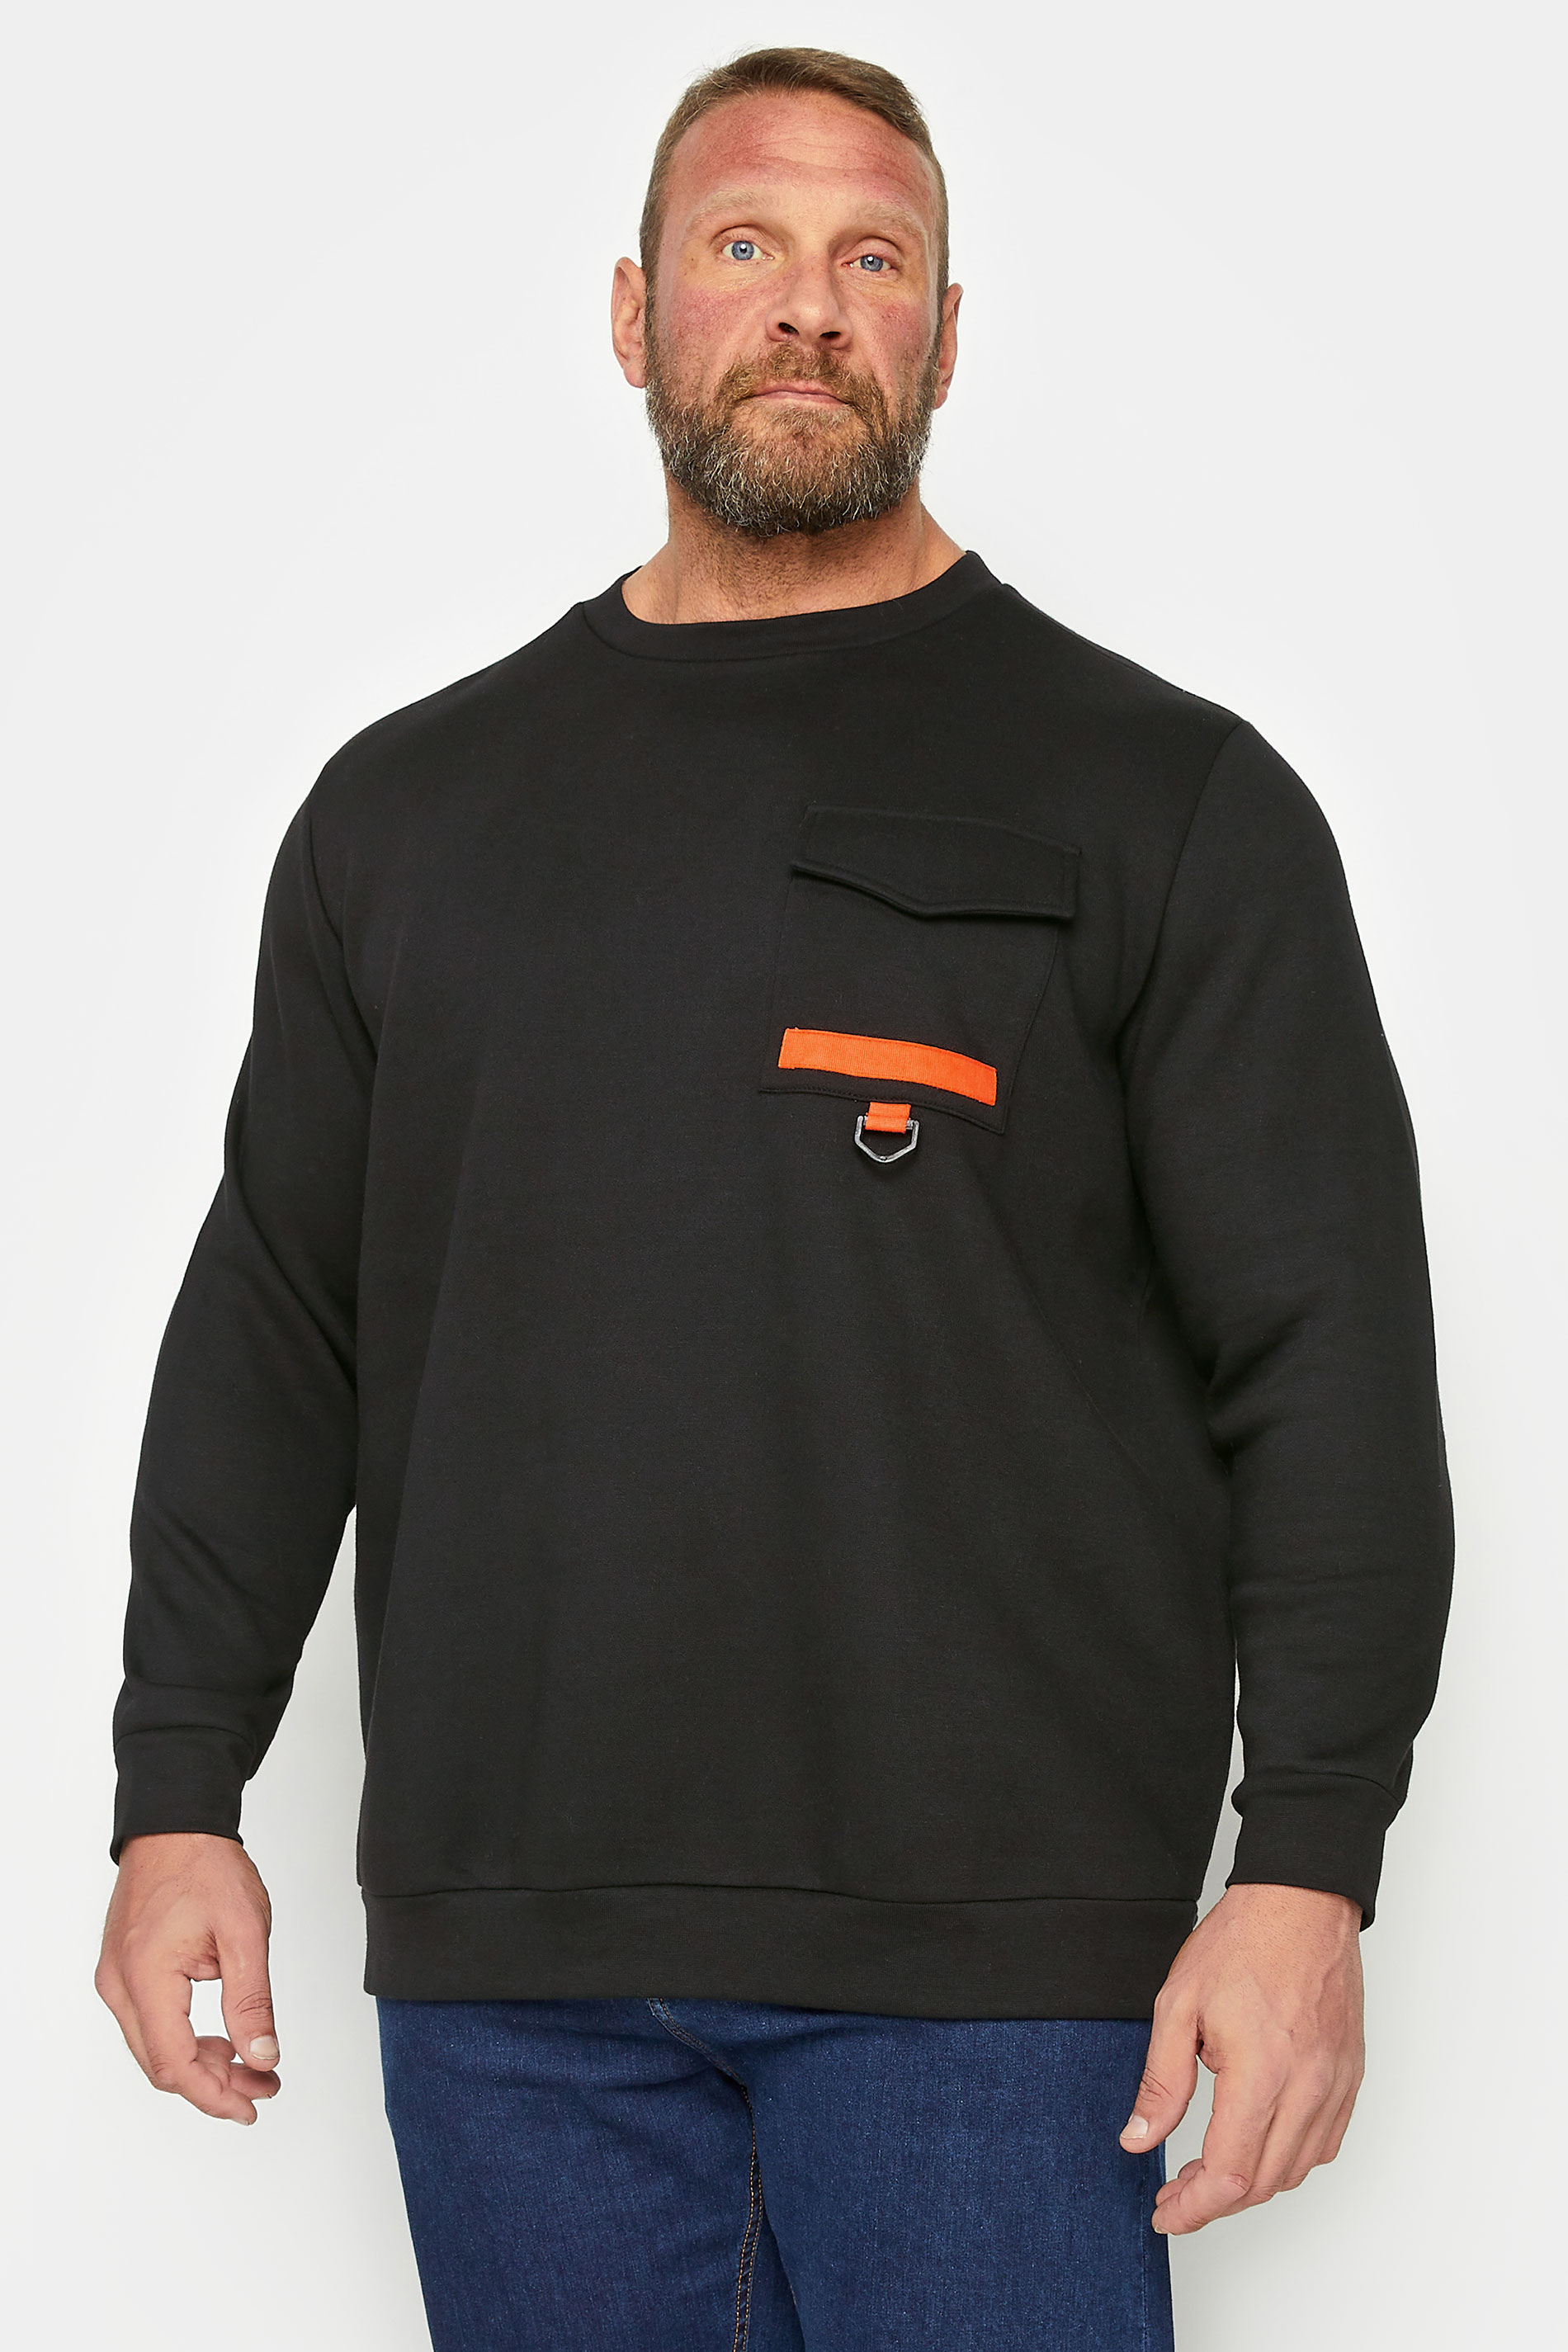 BadRhino Black Pocket Crew Neck Sweatshirt | BadRhino 2